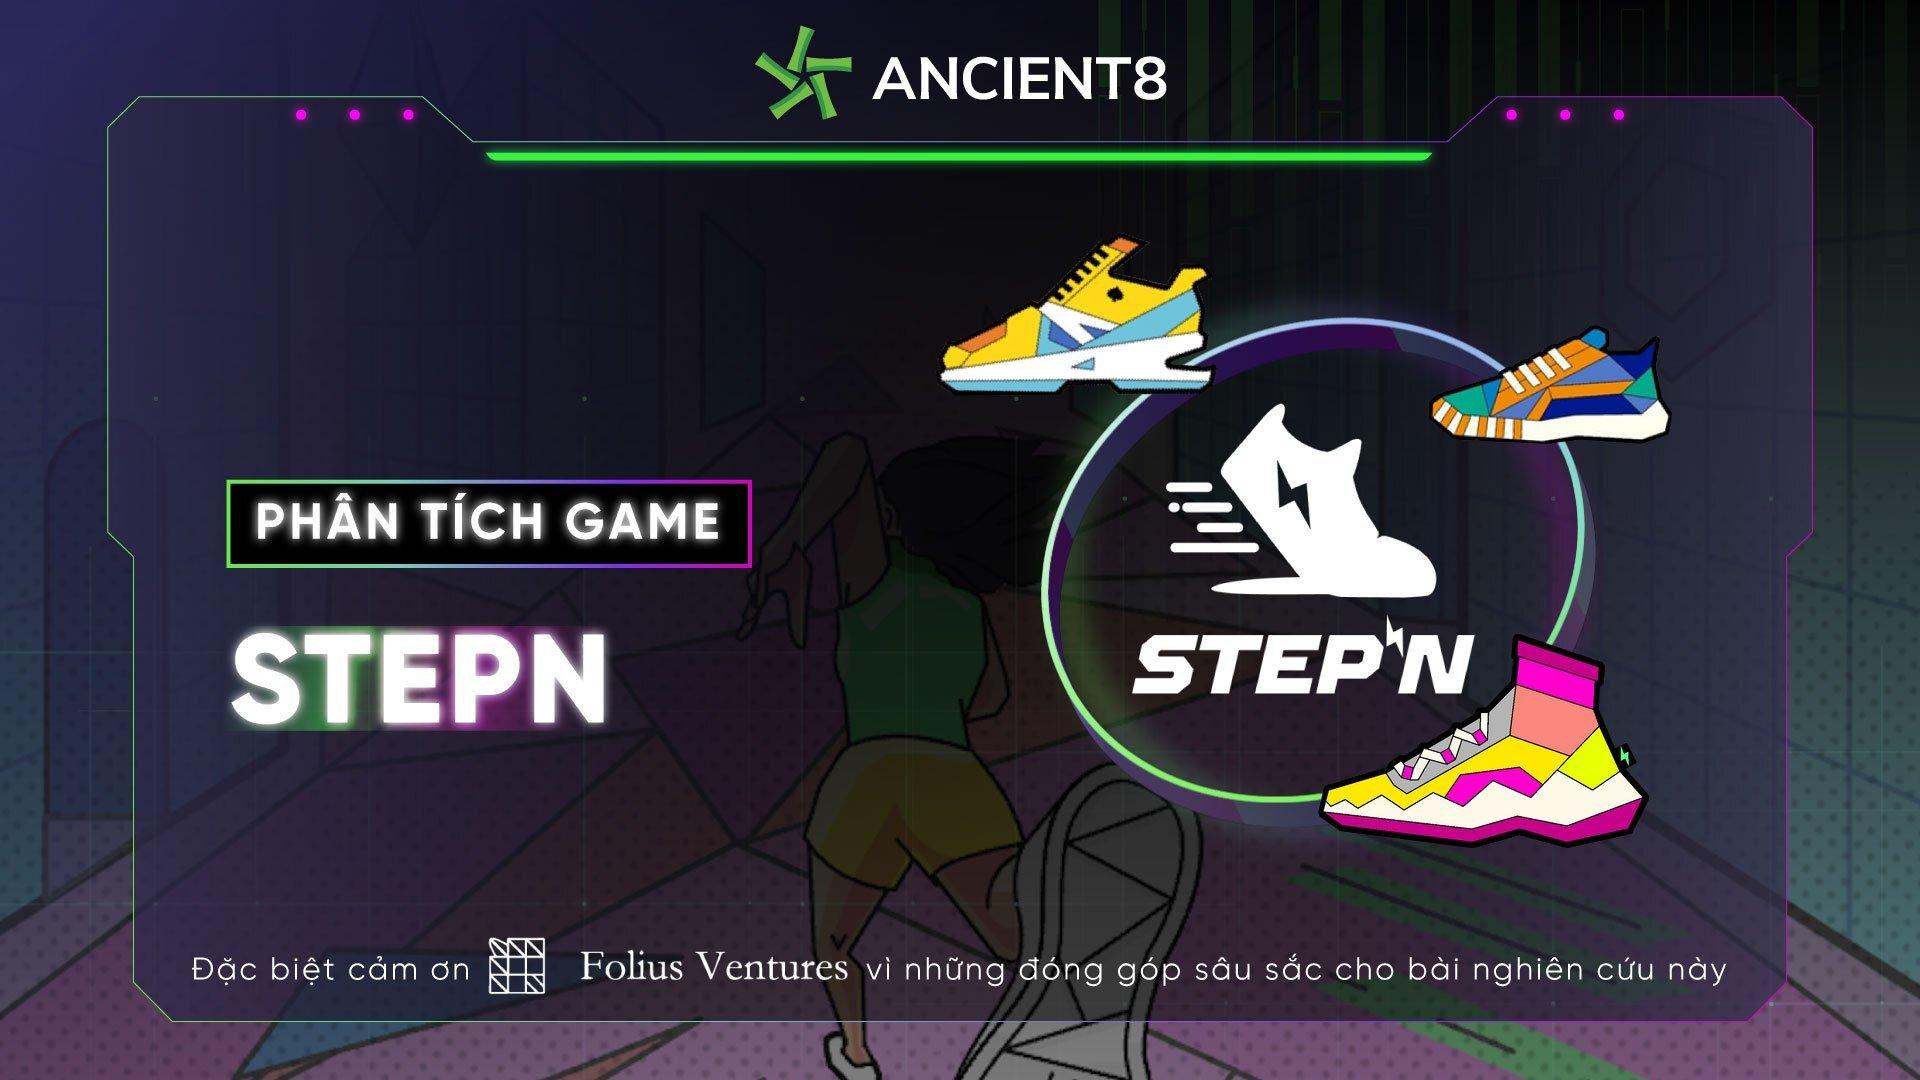 phan-tich-game-stepn-ancient8-x-folius-ventures